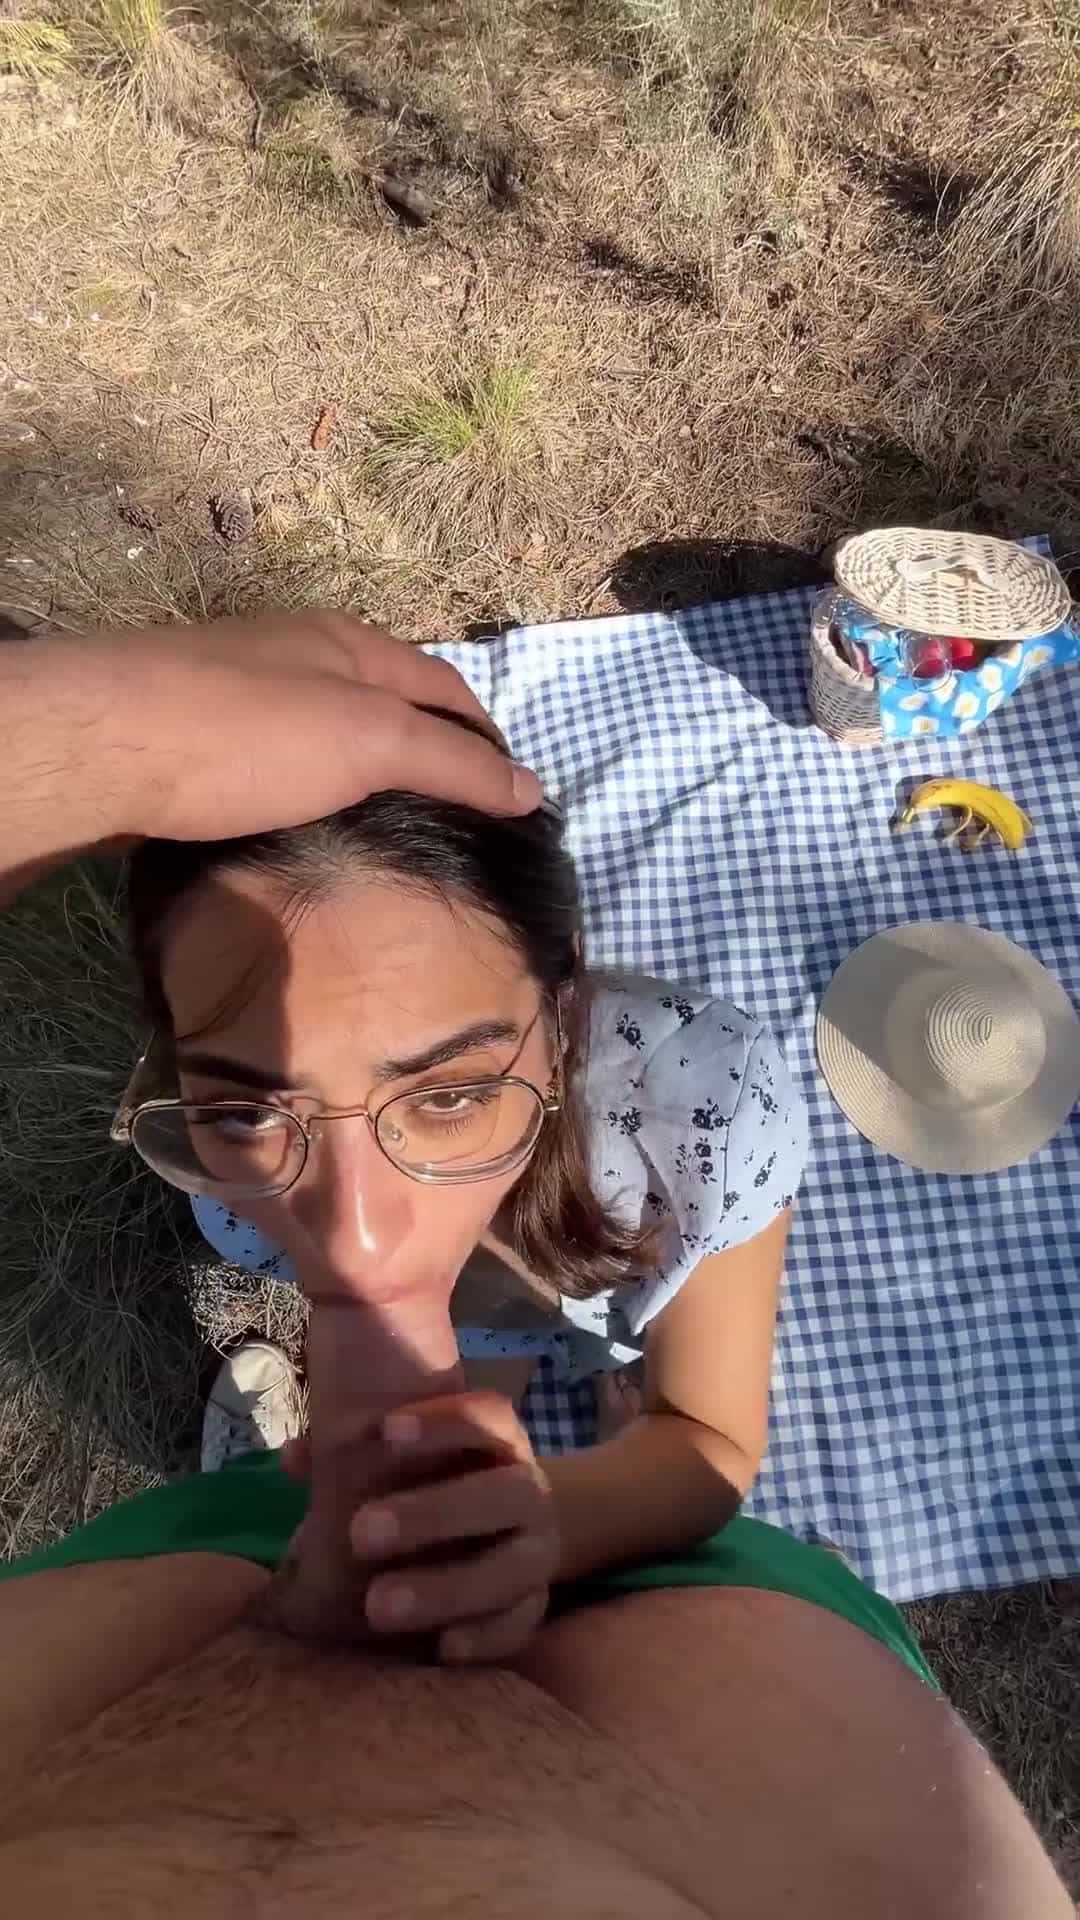 the picnic got interesting